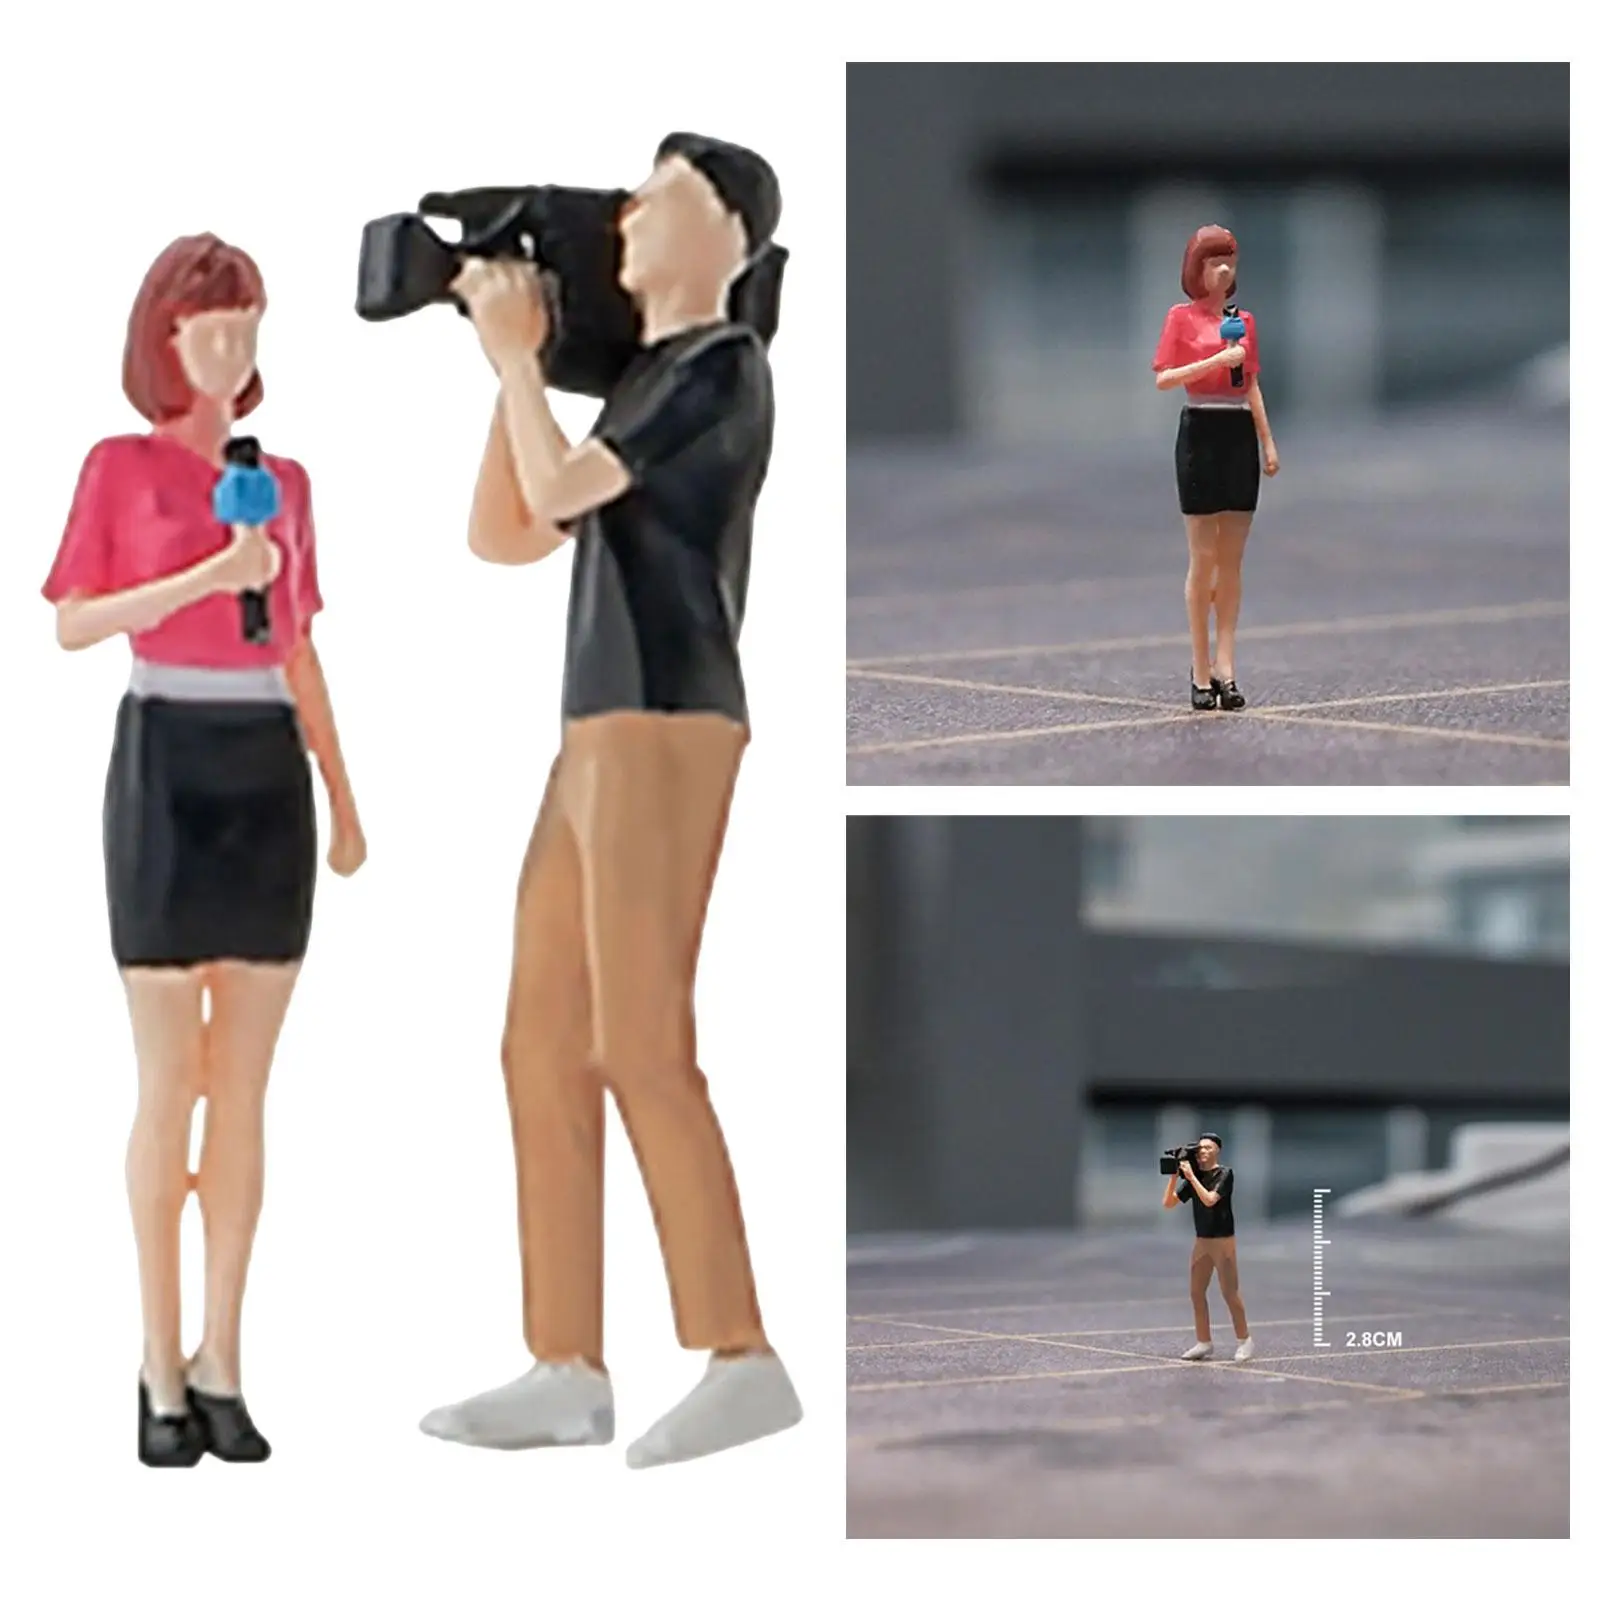 1/64 Scale Figures Collectibles Fairy Garden Miniature Scenes Female Reporter Decor